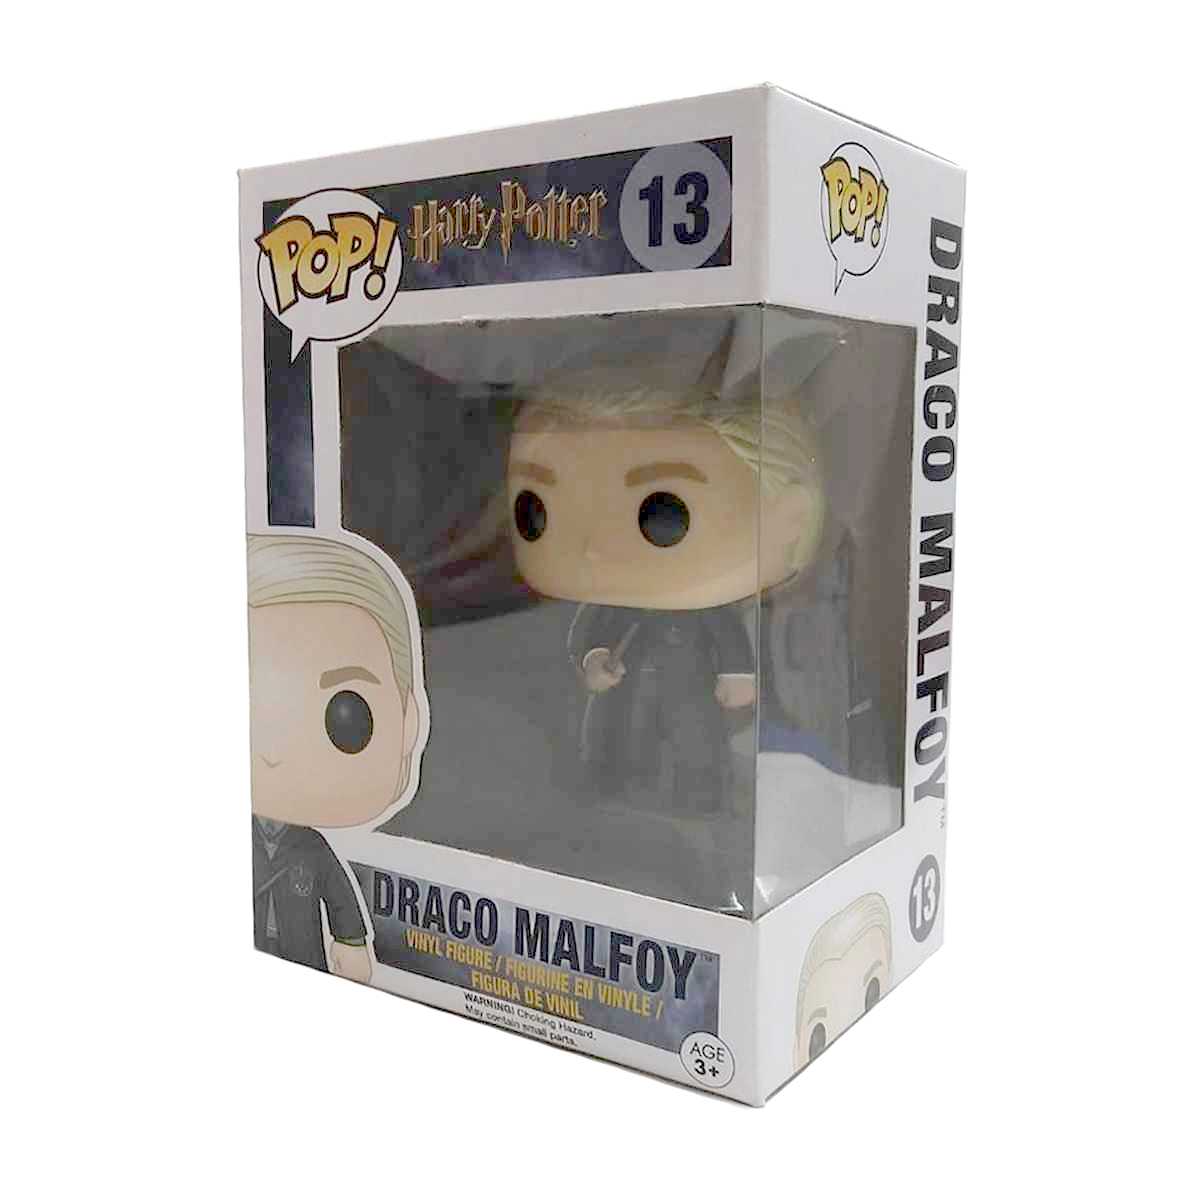 Boneco Colecionável Funko Pop! Draco Malfoy / Harry Potter vinyl figure número 13 Vaulted